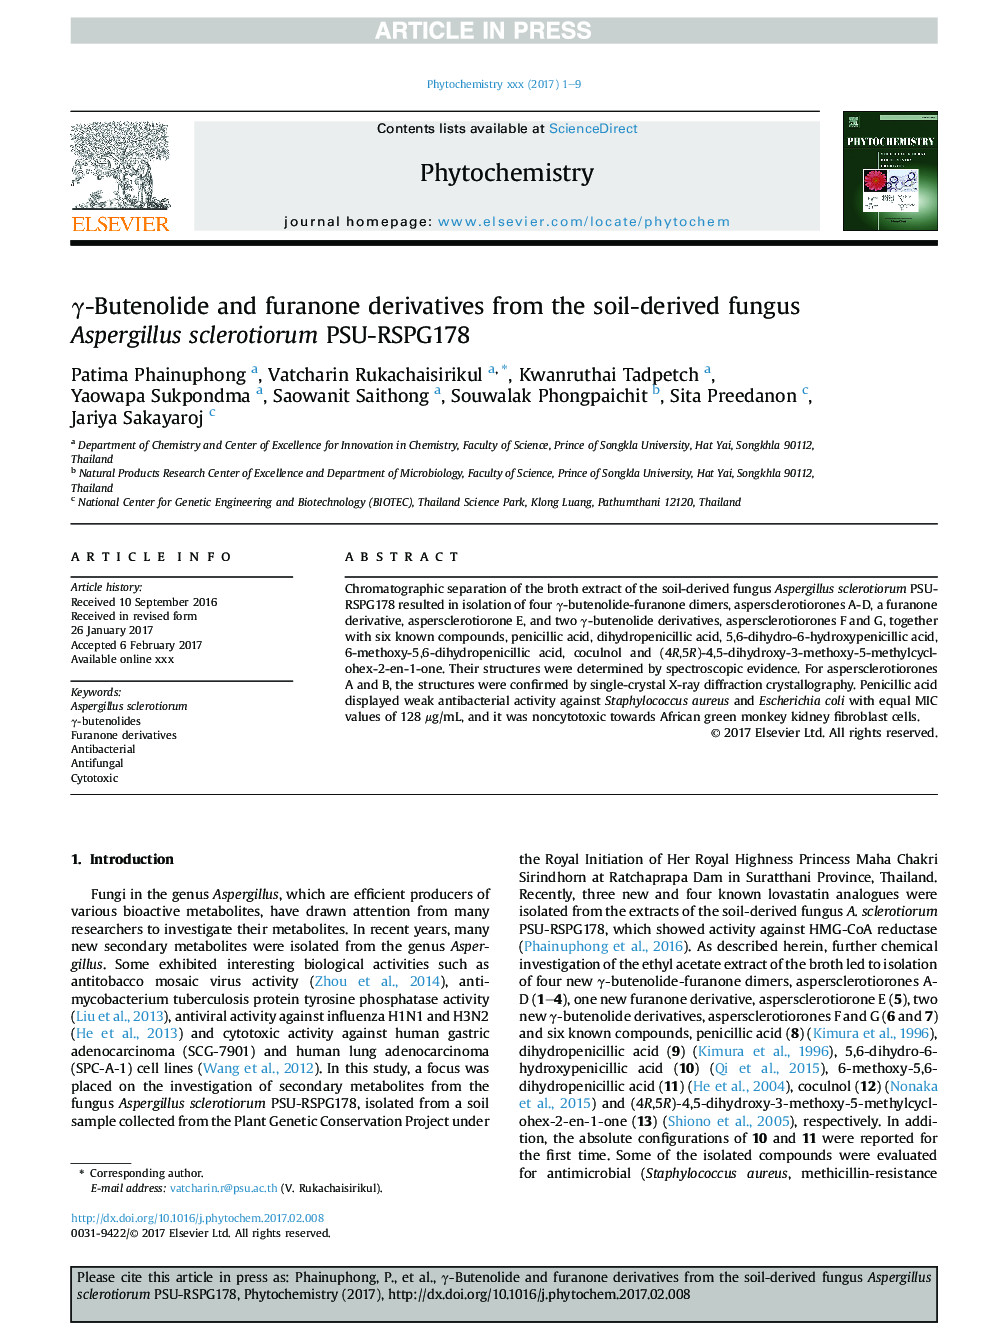 Î³-Butenolide and furanone derivatives from the soil-derived fungus Aspergillus sclerotiorum PSU-RSPG178